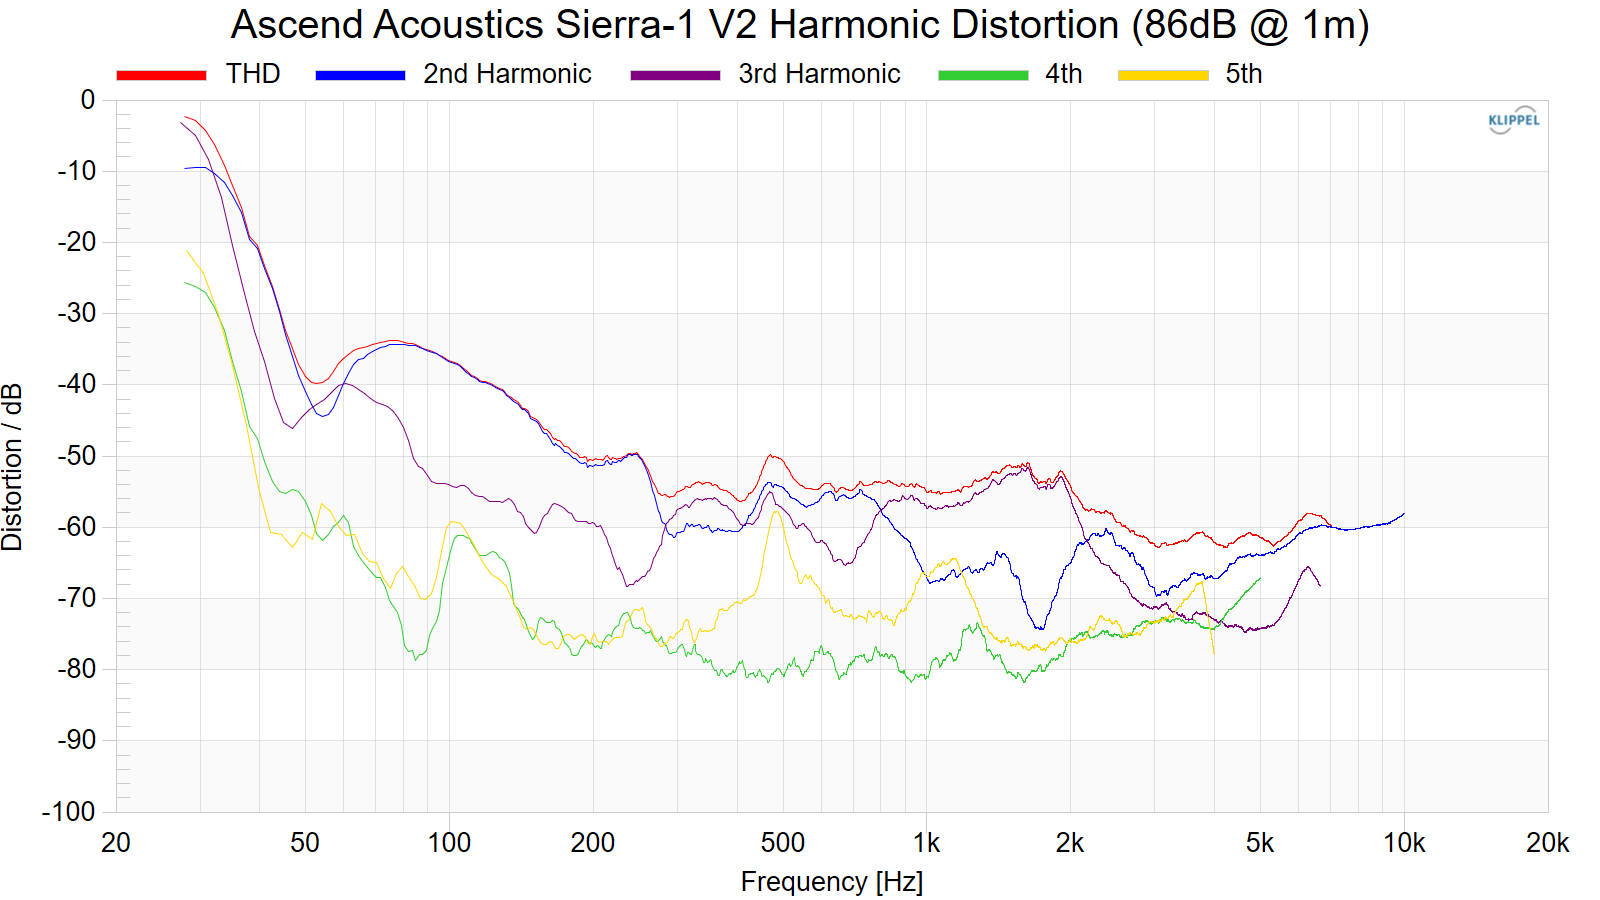 Ascend-Acoustics-Sierra-1-V2-Harmonic-Distortion-86dB-1m.png